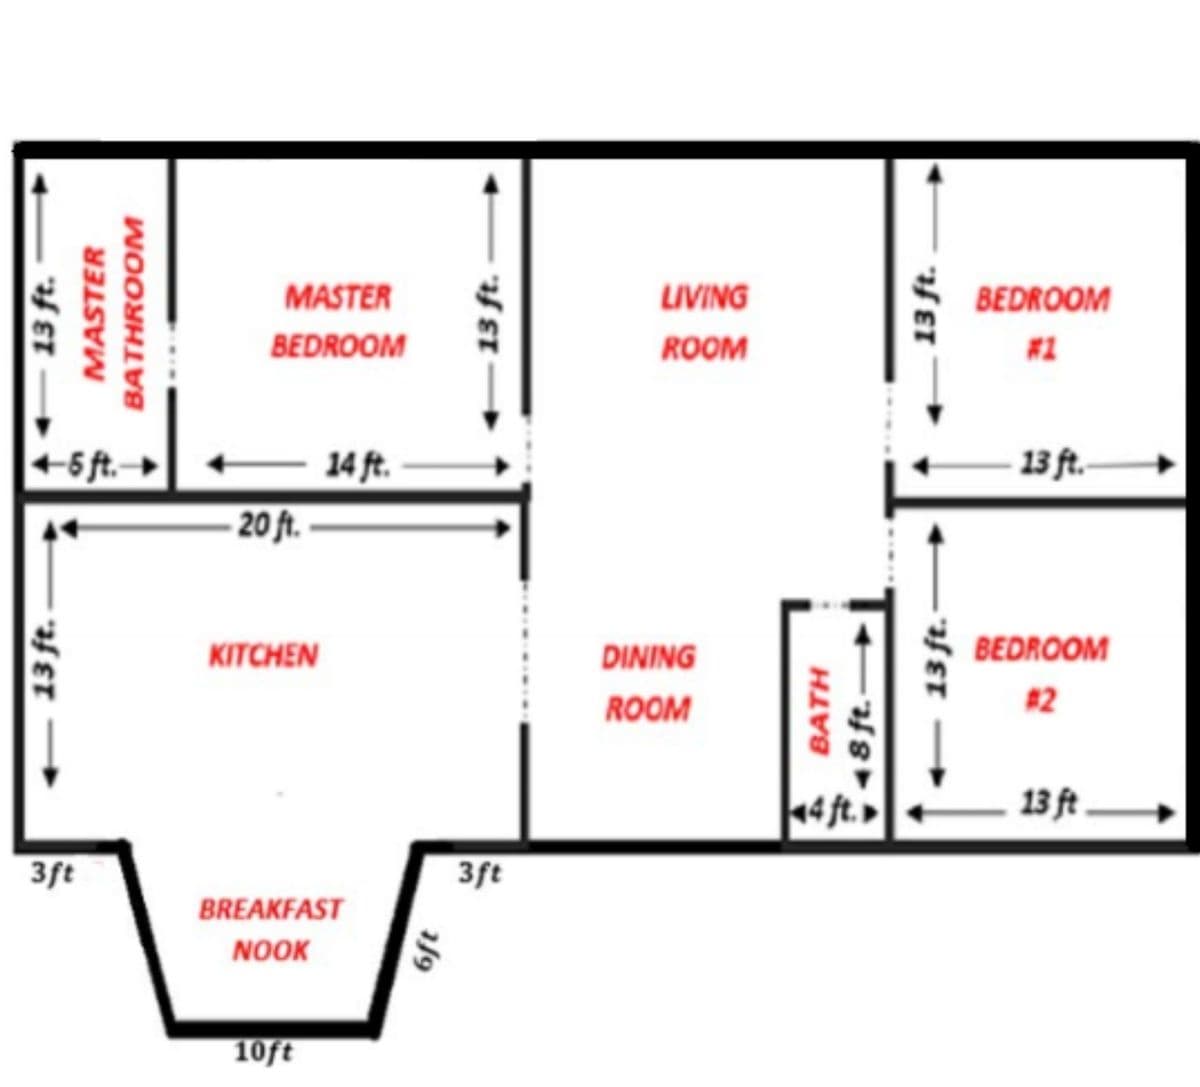 MASTER
LIVING
BEDROOM
BEDROOM
ROOM
#1
+5 ft.→
14 ft.
13 ft.
- 20 ft.
KITCHEN
DINING
BEDROOM
ROOM
#2
44 ft. »
13 ft.
3ft
3ft
BREAKFAST
NOOK
10ft
13 ft.
13 ft.
MASTER
BATHROOM
6ft
13 ft.
BATH
18 ft.
13 ft.-
13 ft.
